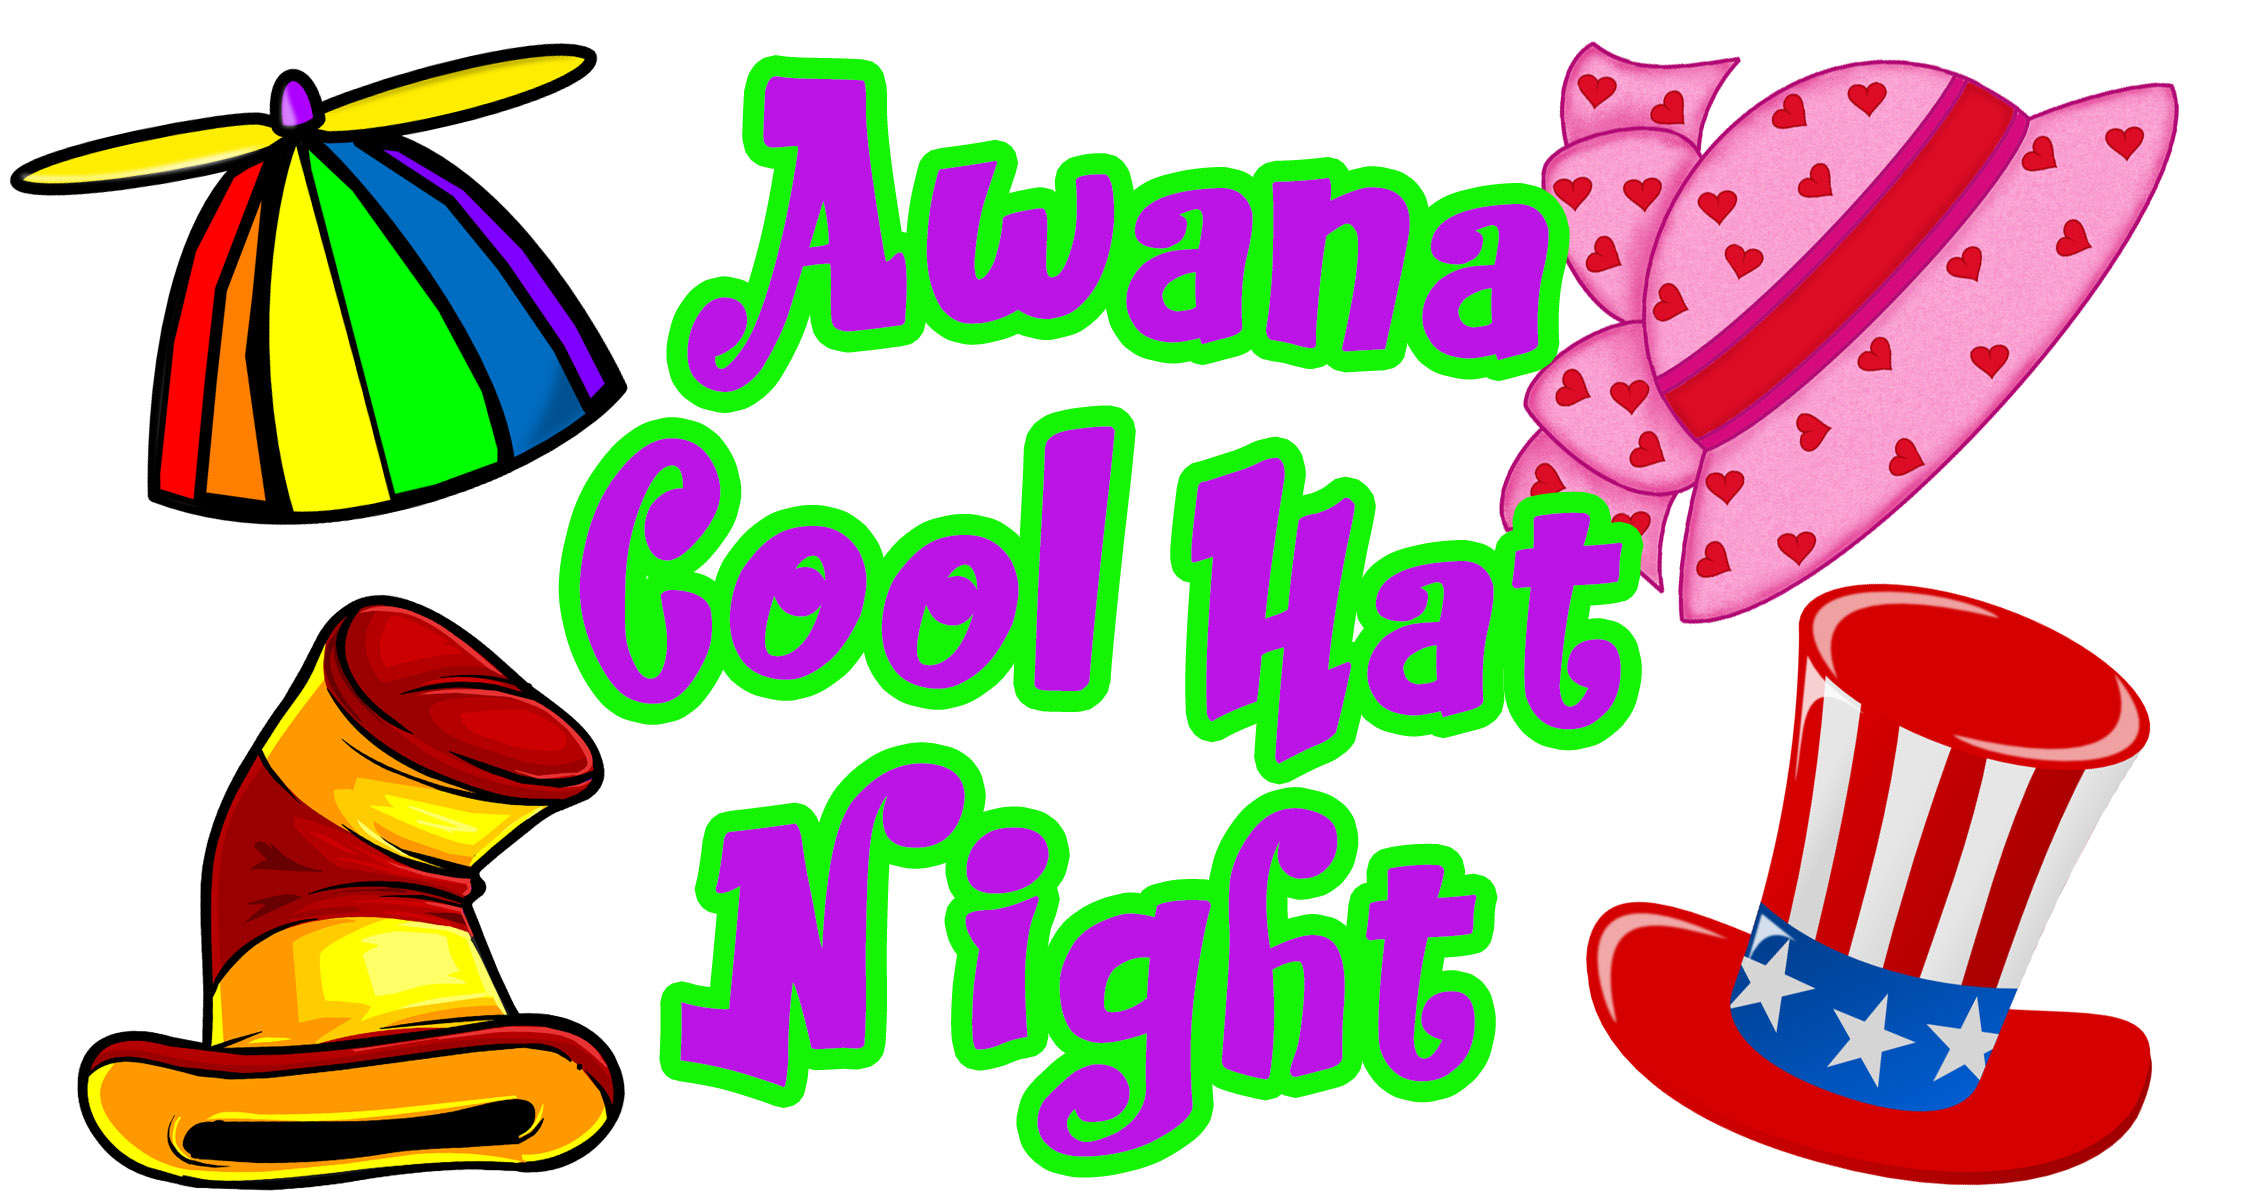 Awana Cool Hat Night image